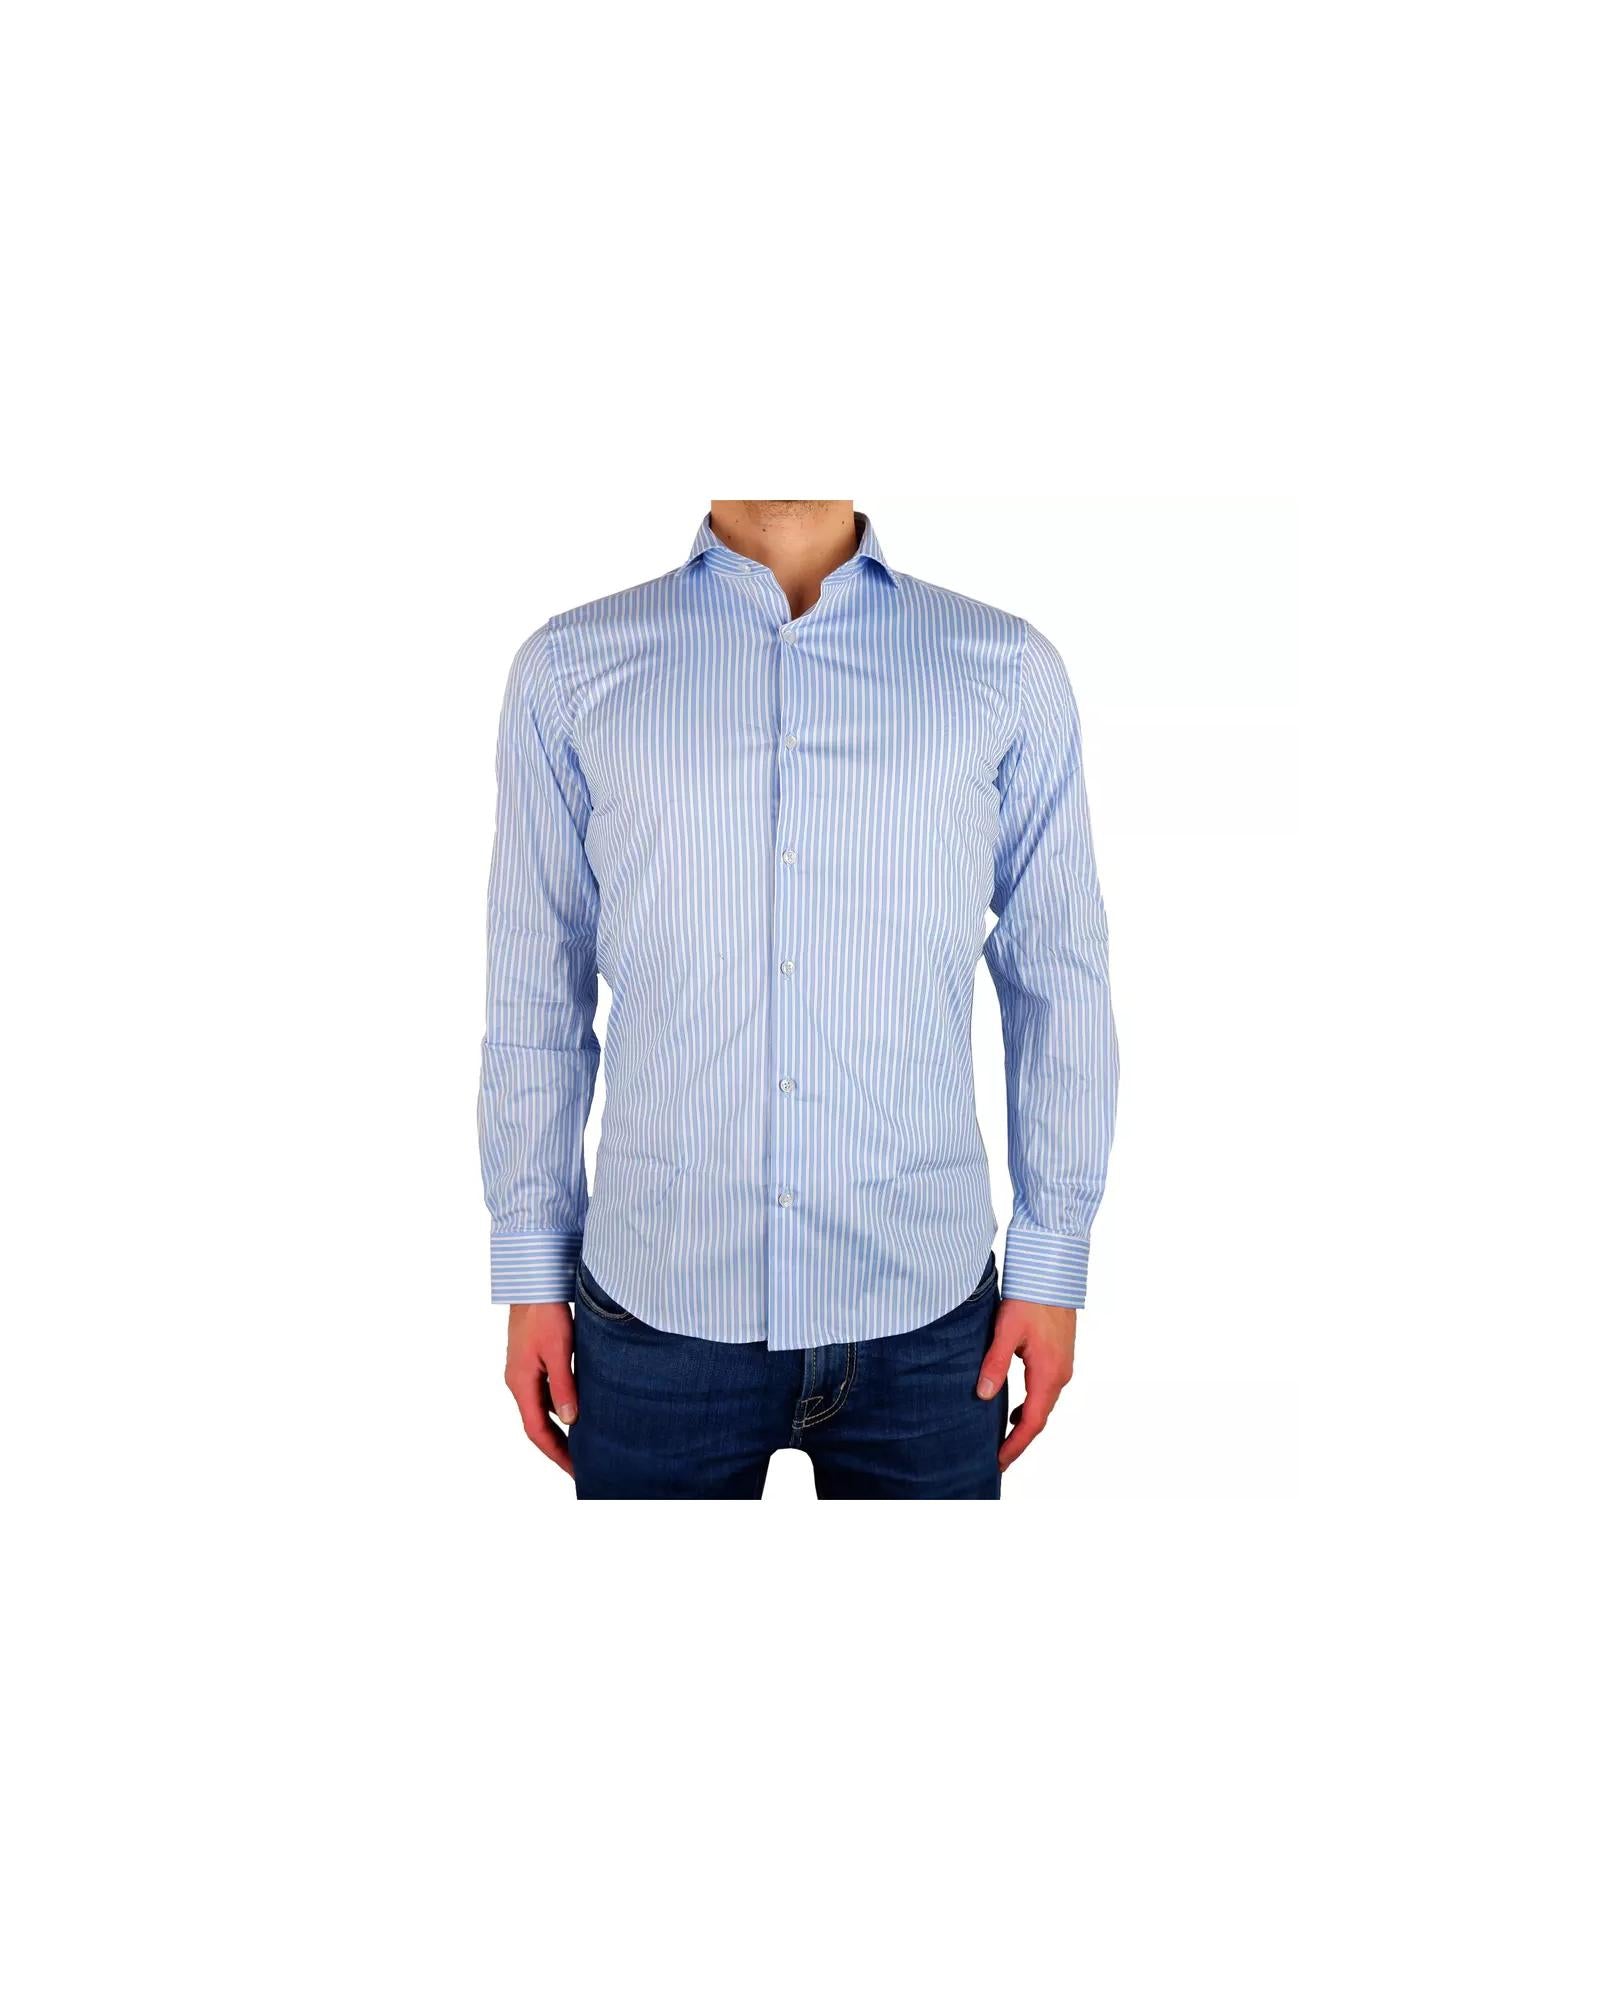 Milano Light Blue Striped Shirt - 100% Cotton 42 IT Men